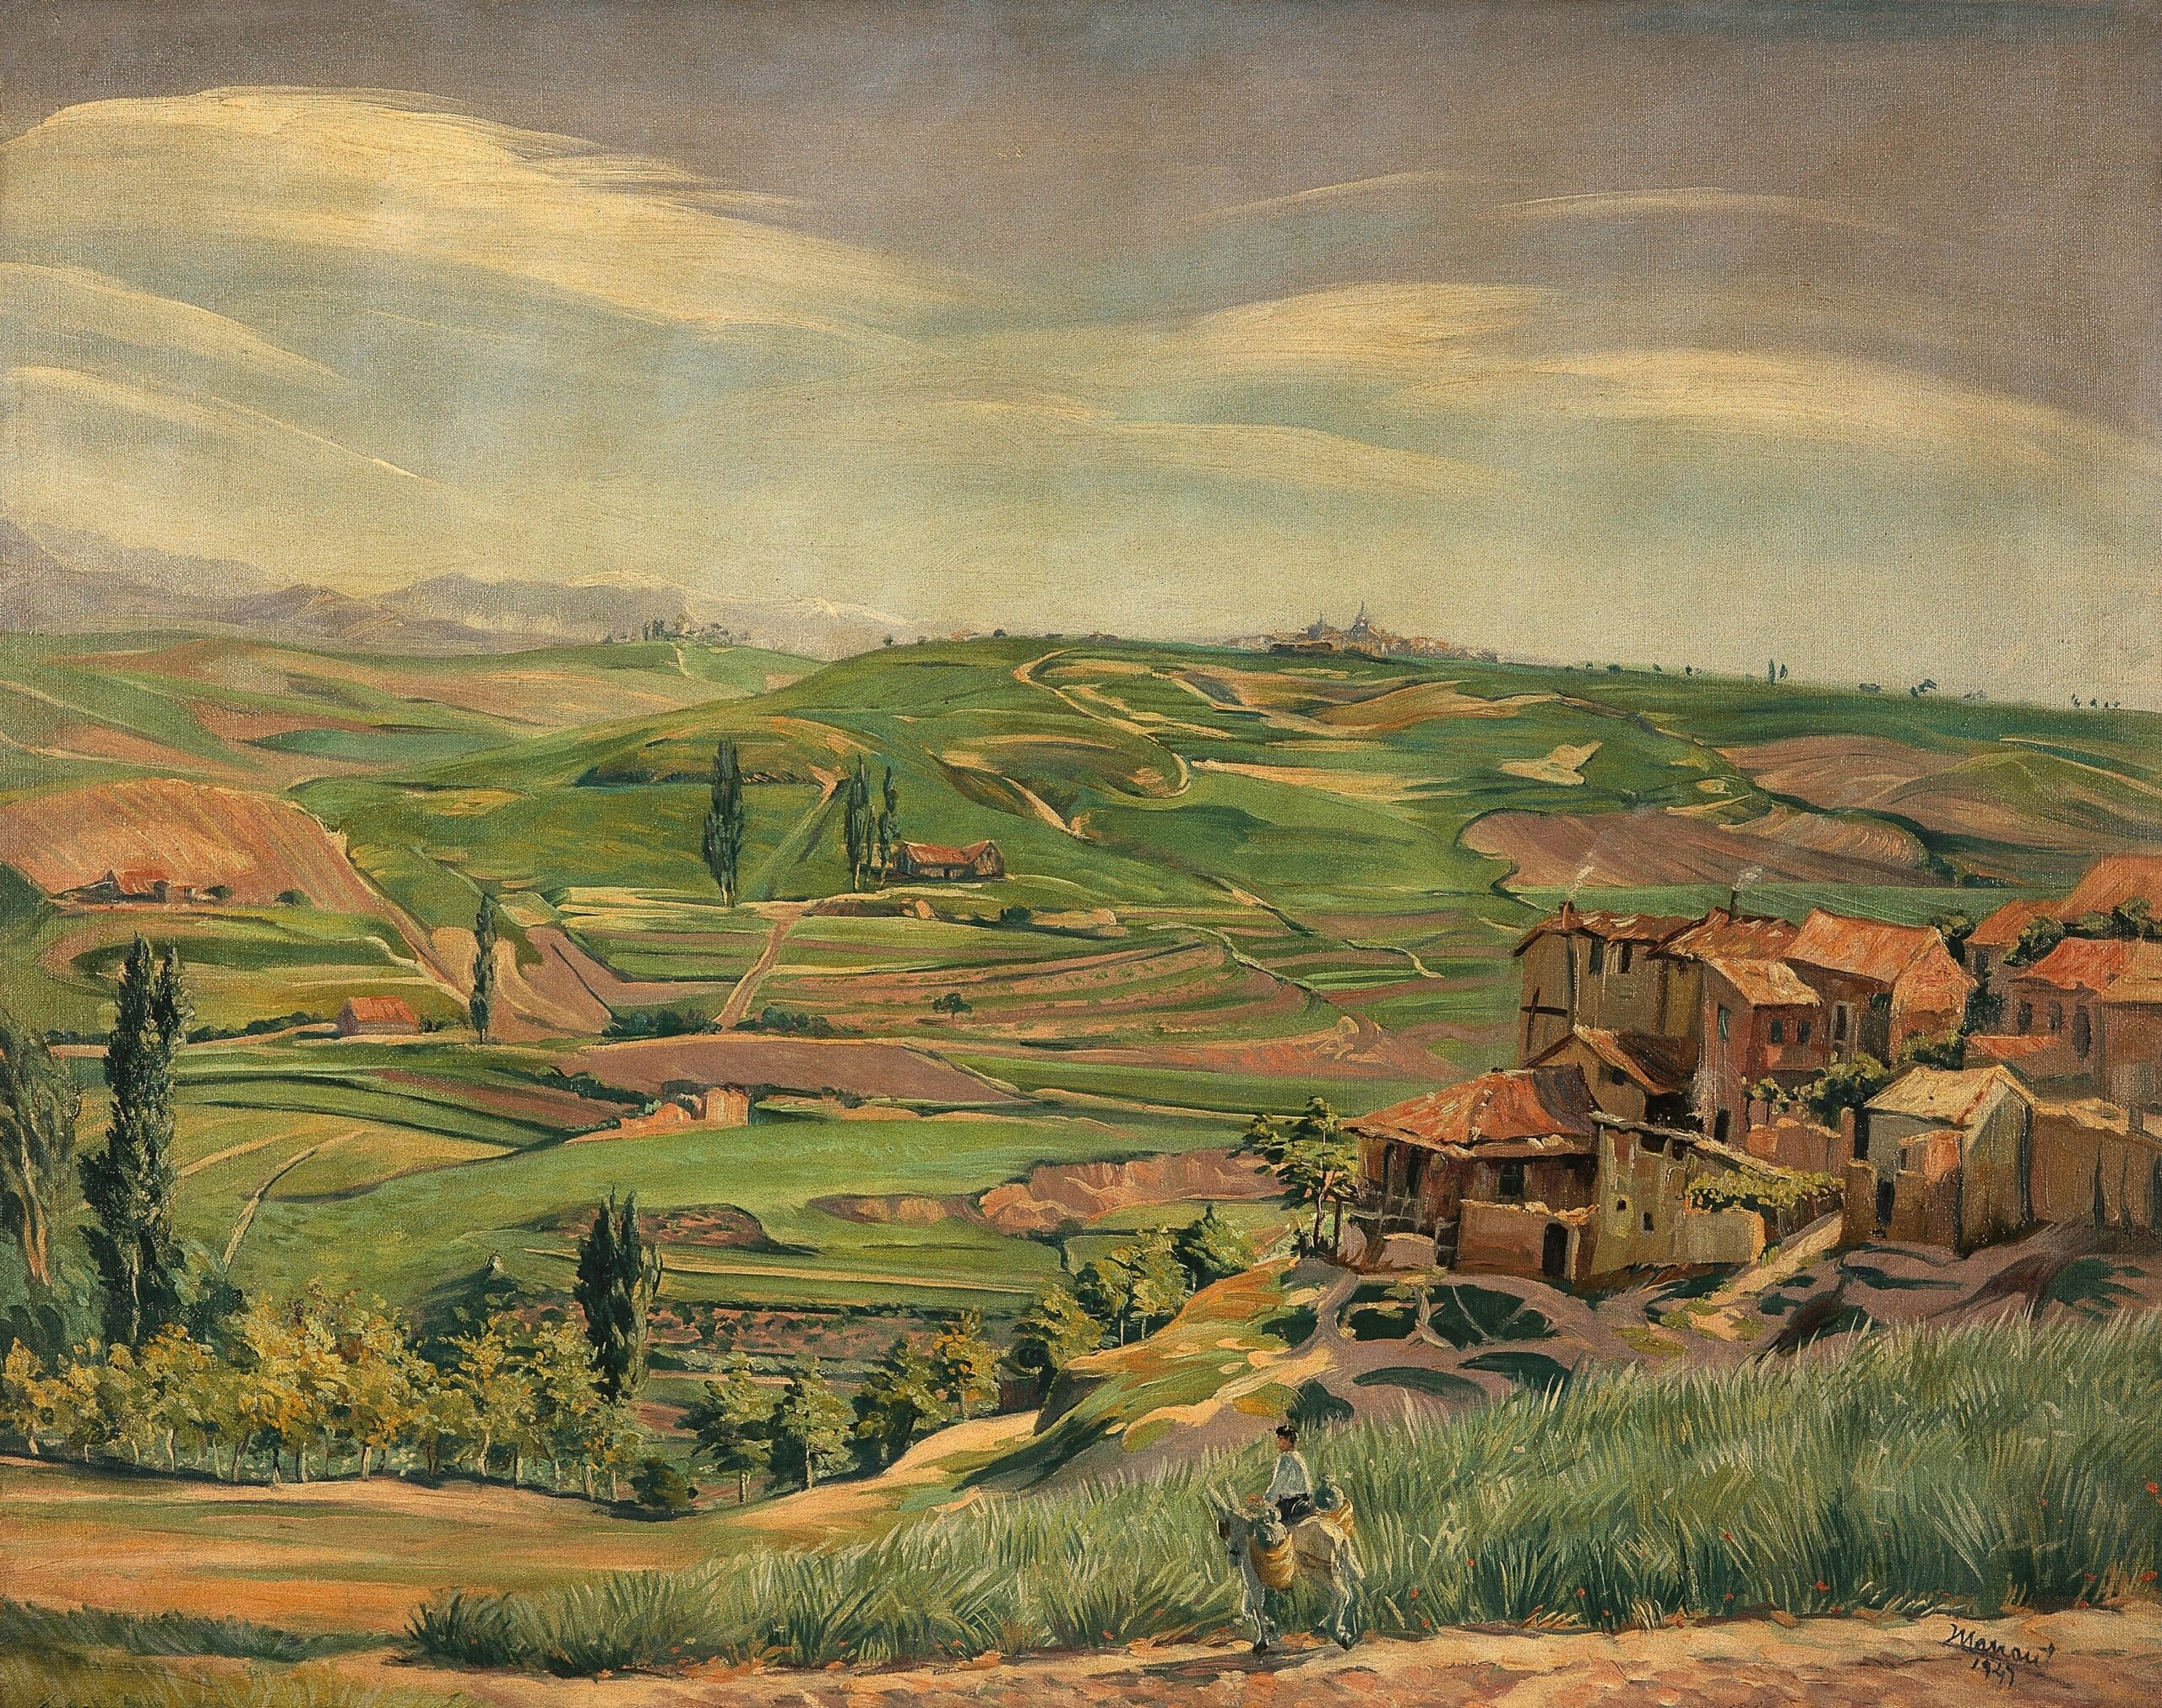 Pintura de José Manaut titulada Paisaje castellano, 1947. Óleo sobre lienzo.